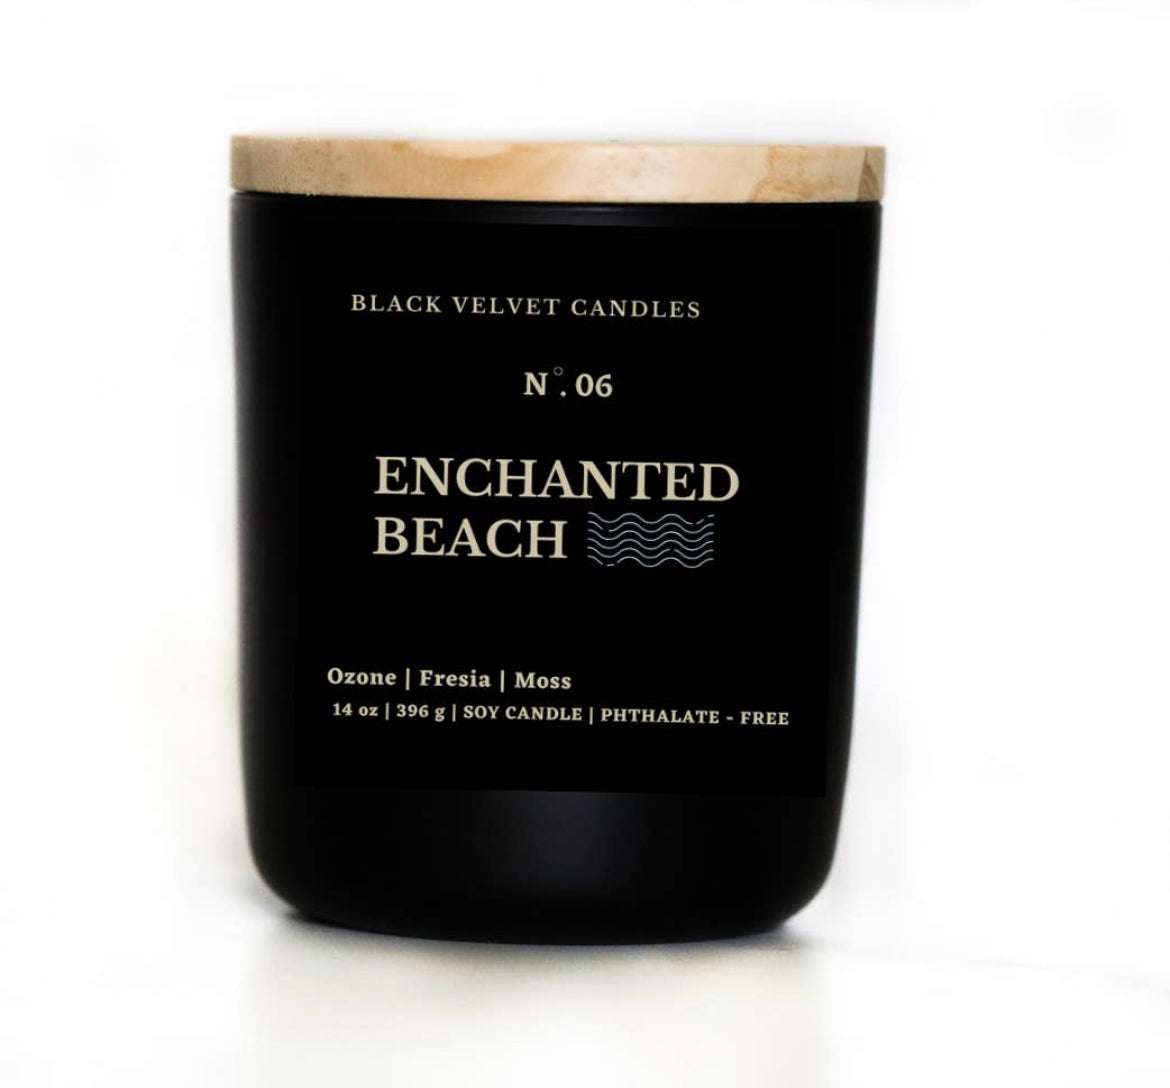 Black Velvet Candles- Enchanted Beach